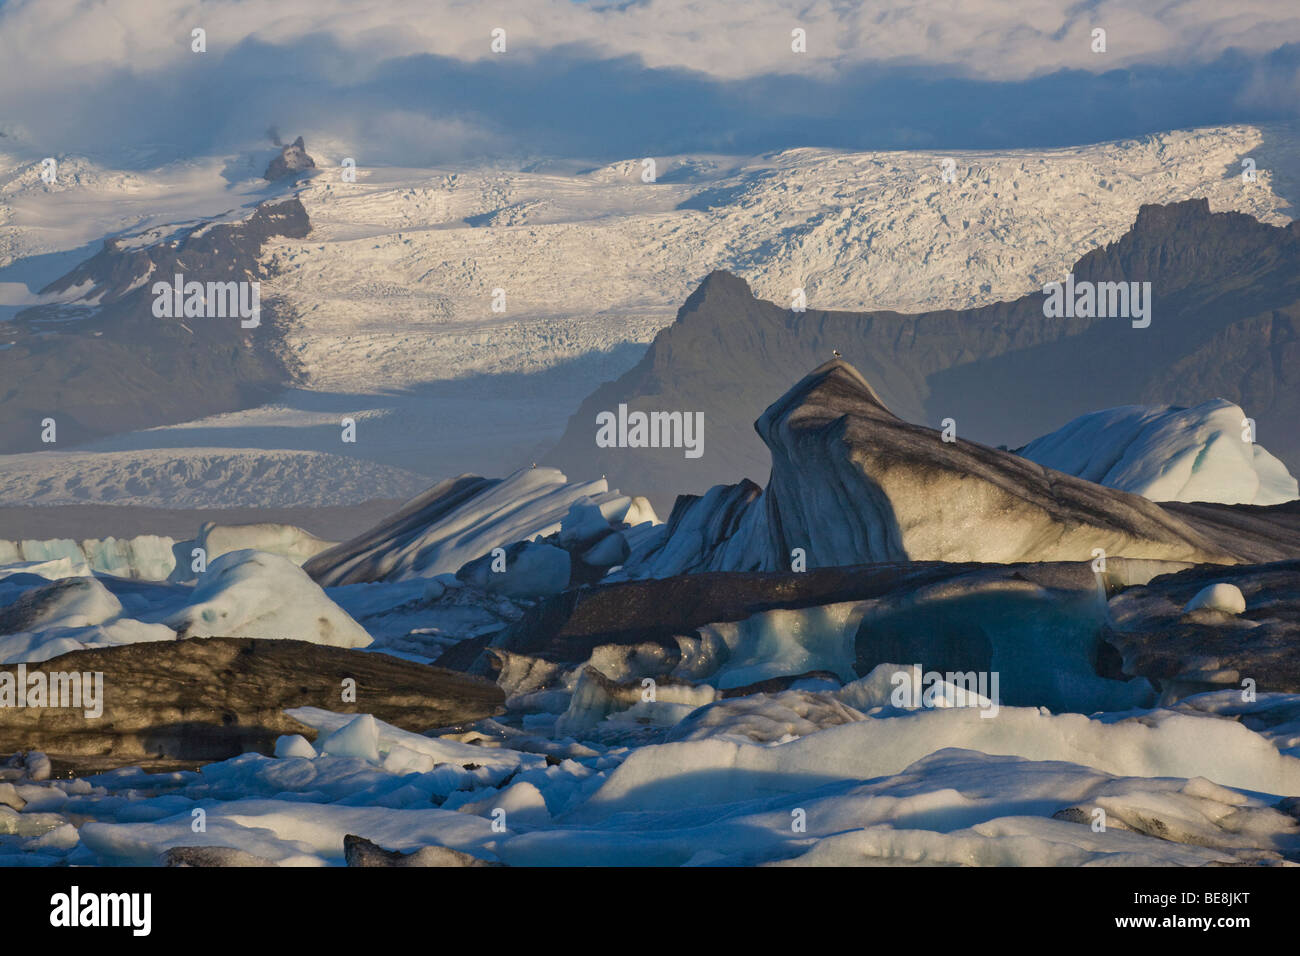 jokulsarlon ijsbergenmeer met gletsjer, jokulsarlon iceberglake with glacier Stock Photo